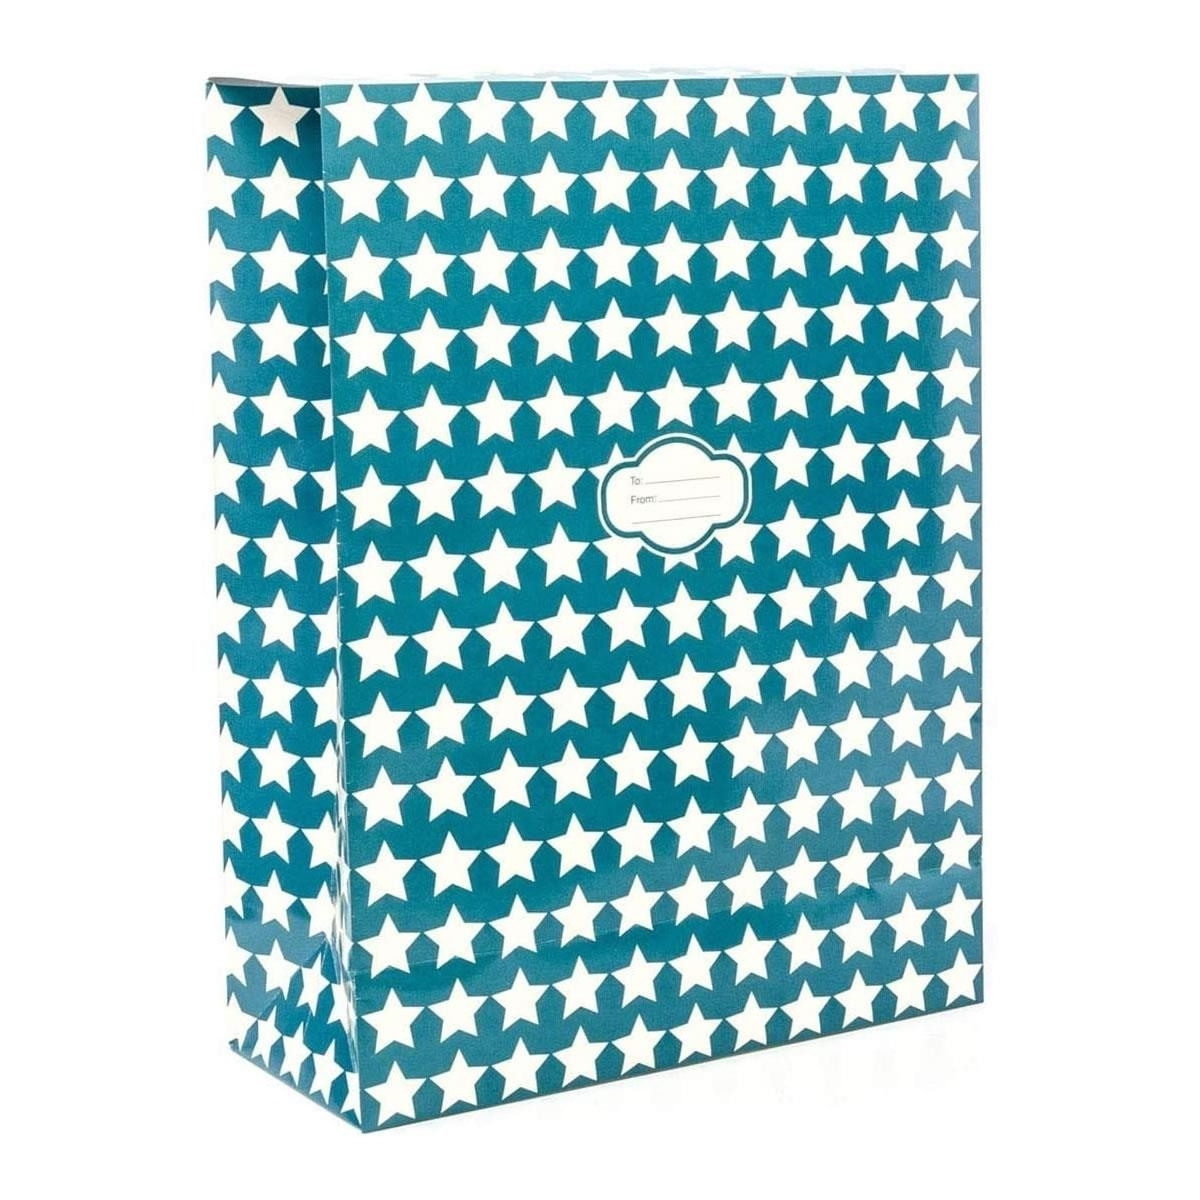 Pressie Pouch Peel & Seal Gift Bag Blue Stars 12pk Large No-Wrap Present